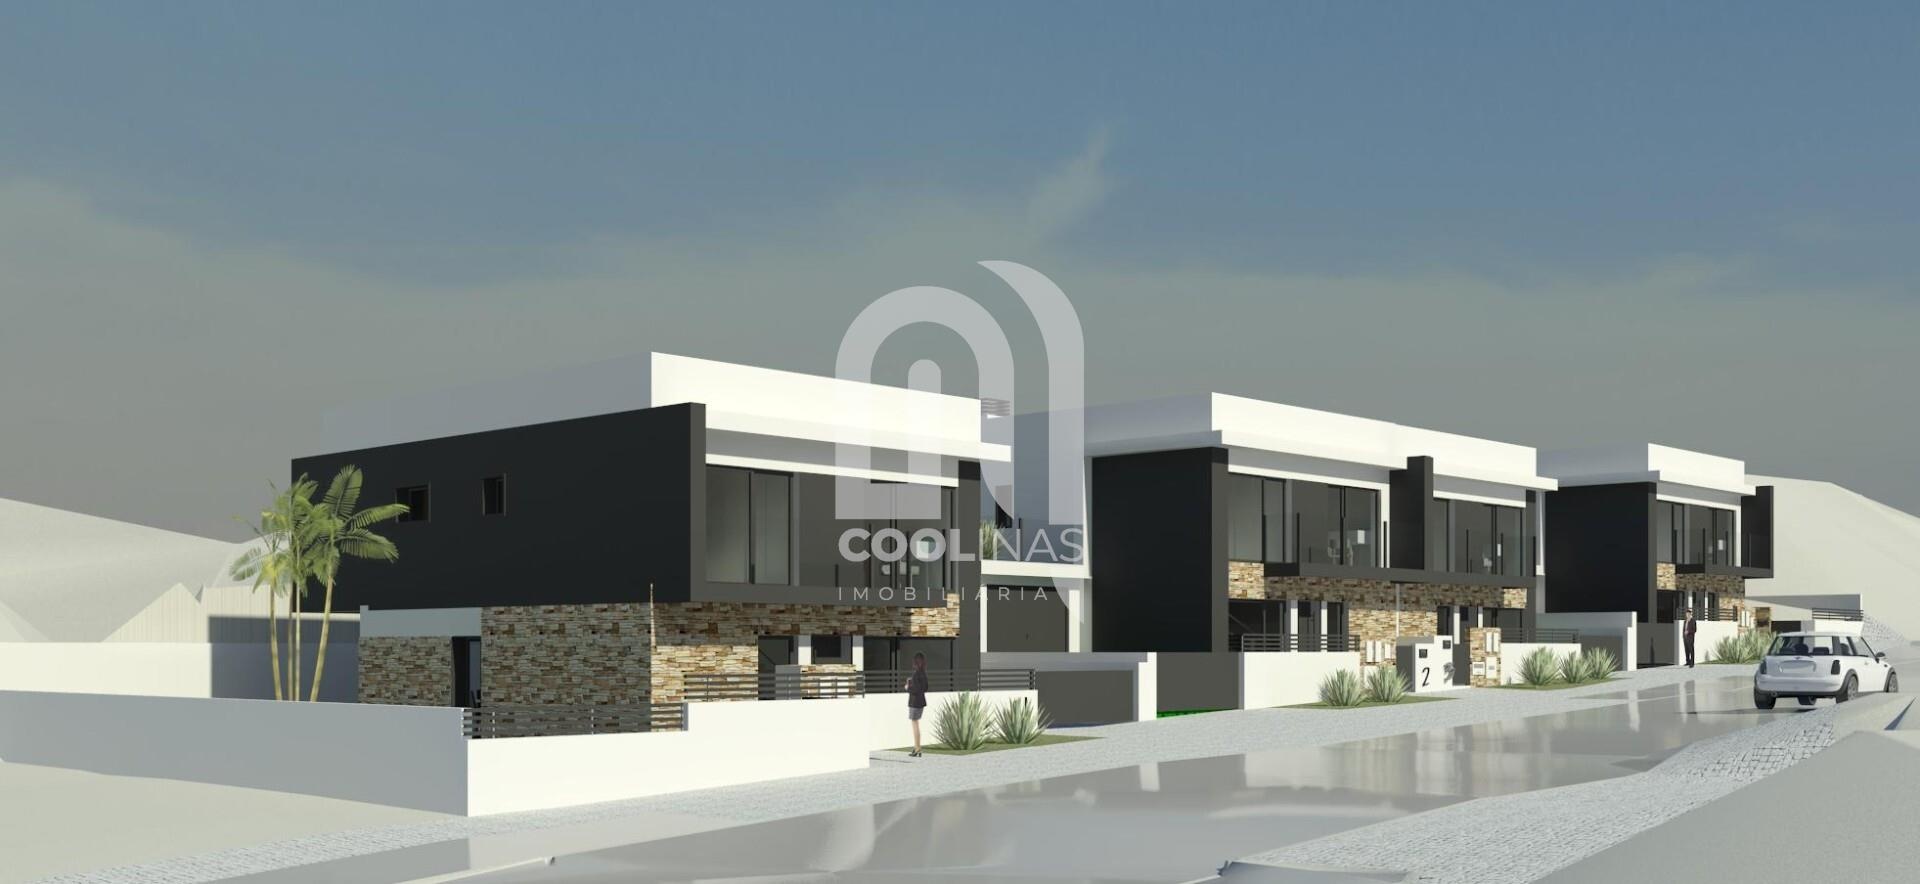 Maison T4 en Projet Avec Piscine, Garage et Barbecue à Sobreda de Caparica, Almada